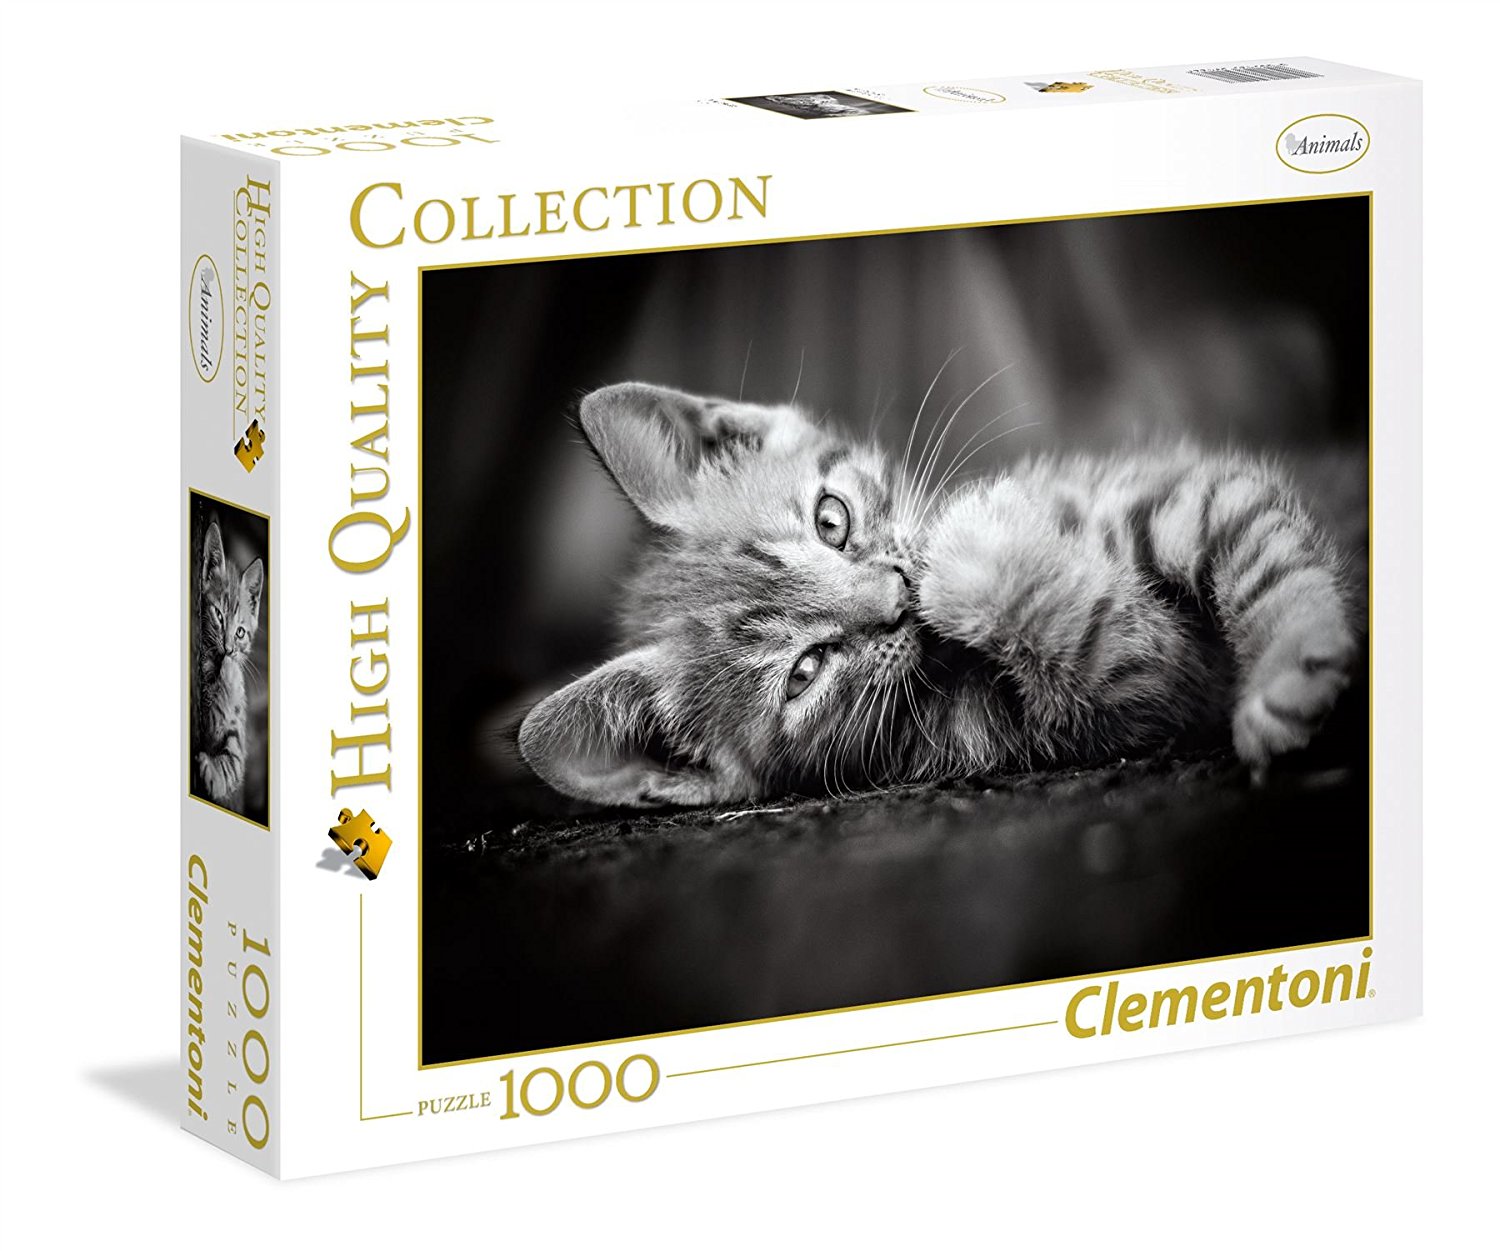 Puzzle Kitten Clementoni 1000 Pieces Jigsaw Puzzles Cats Jigsaw Puzzle